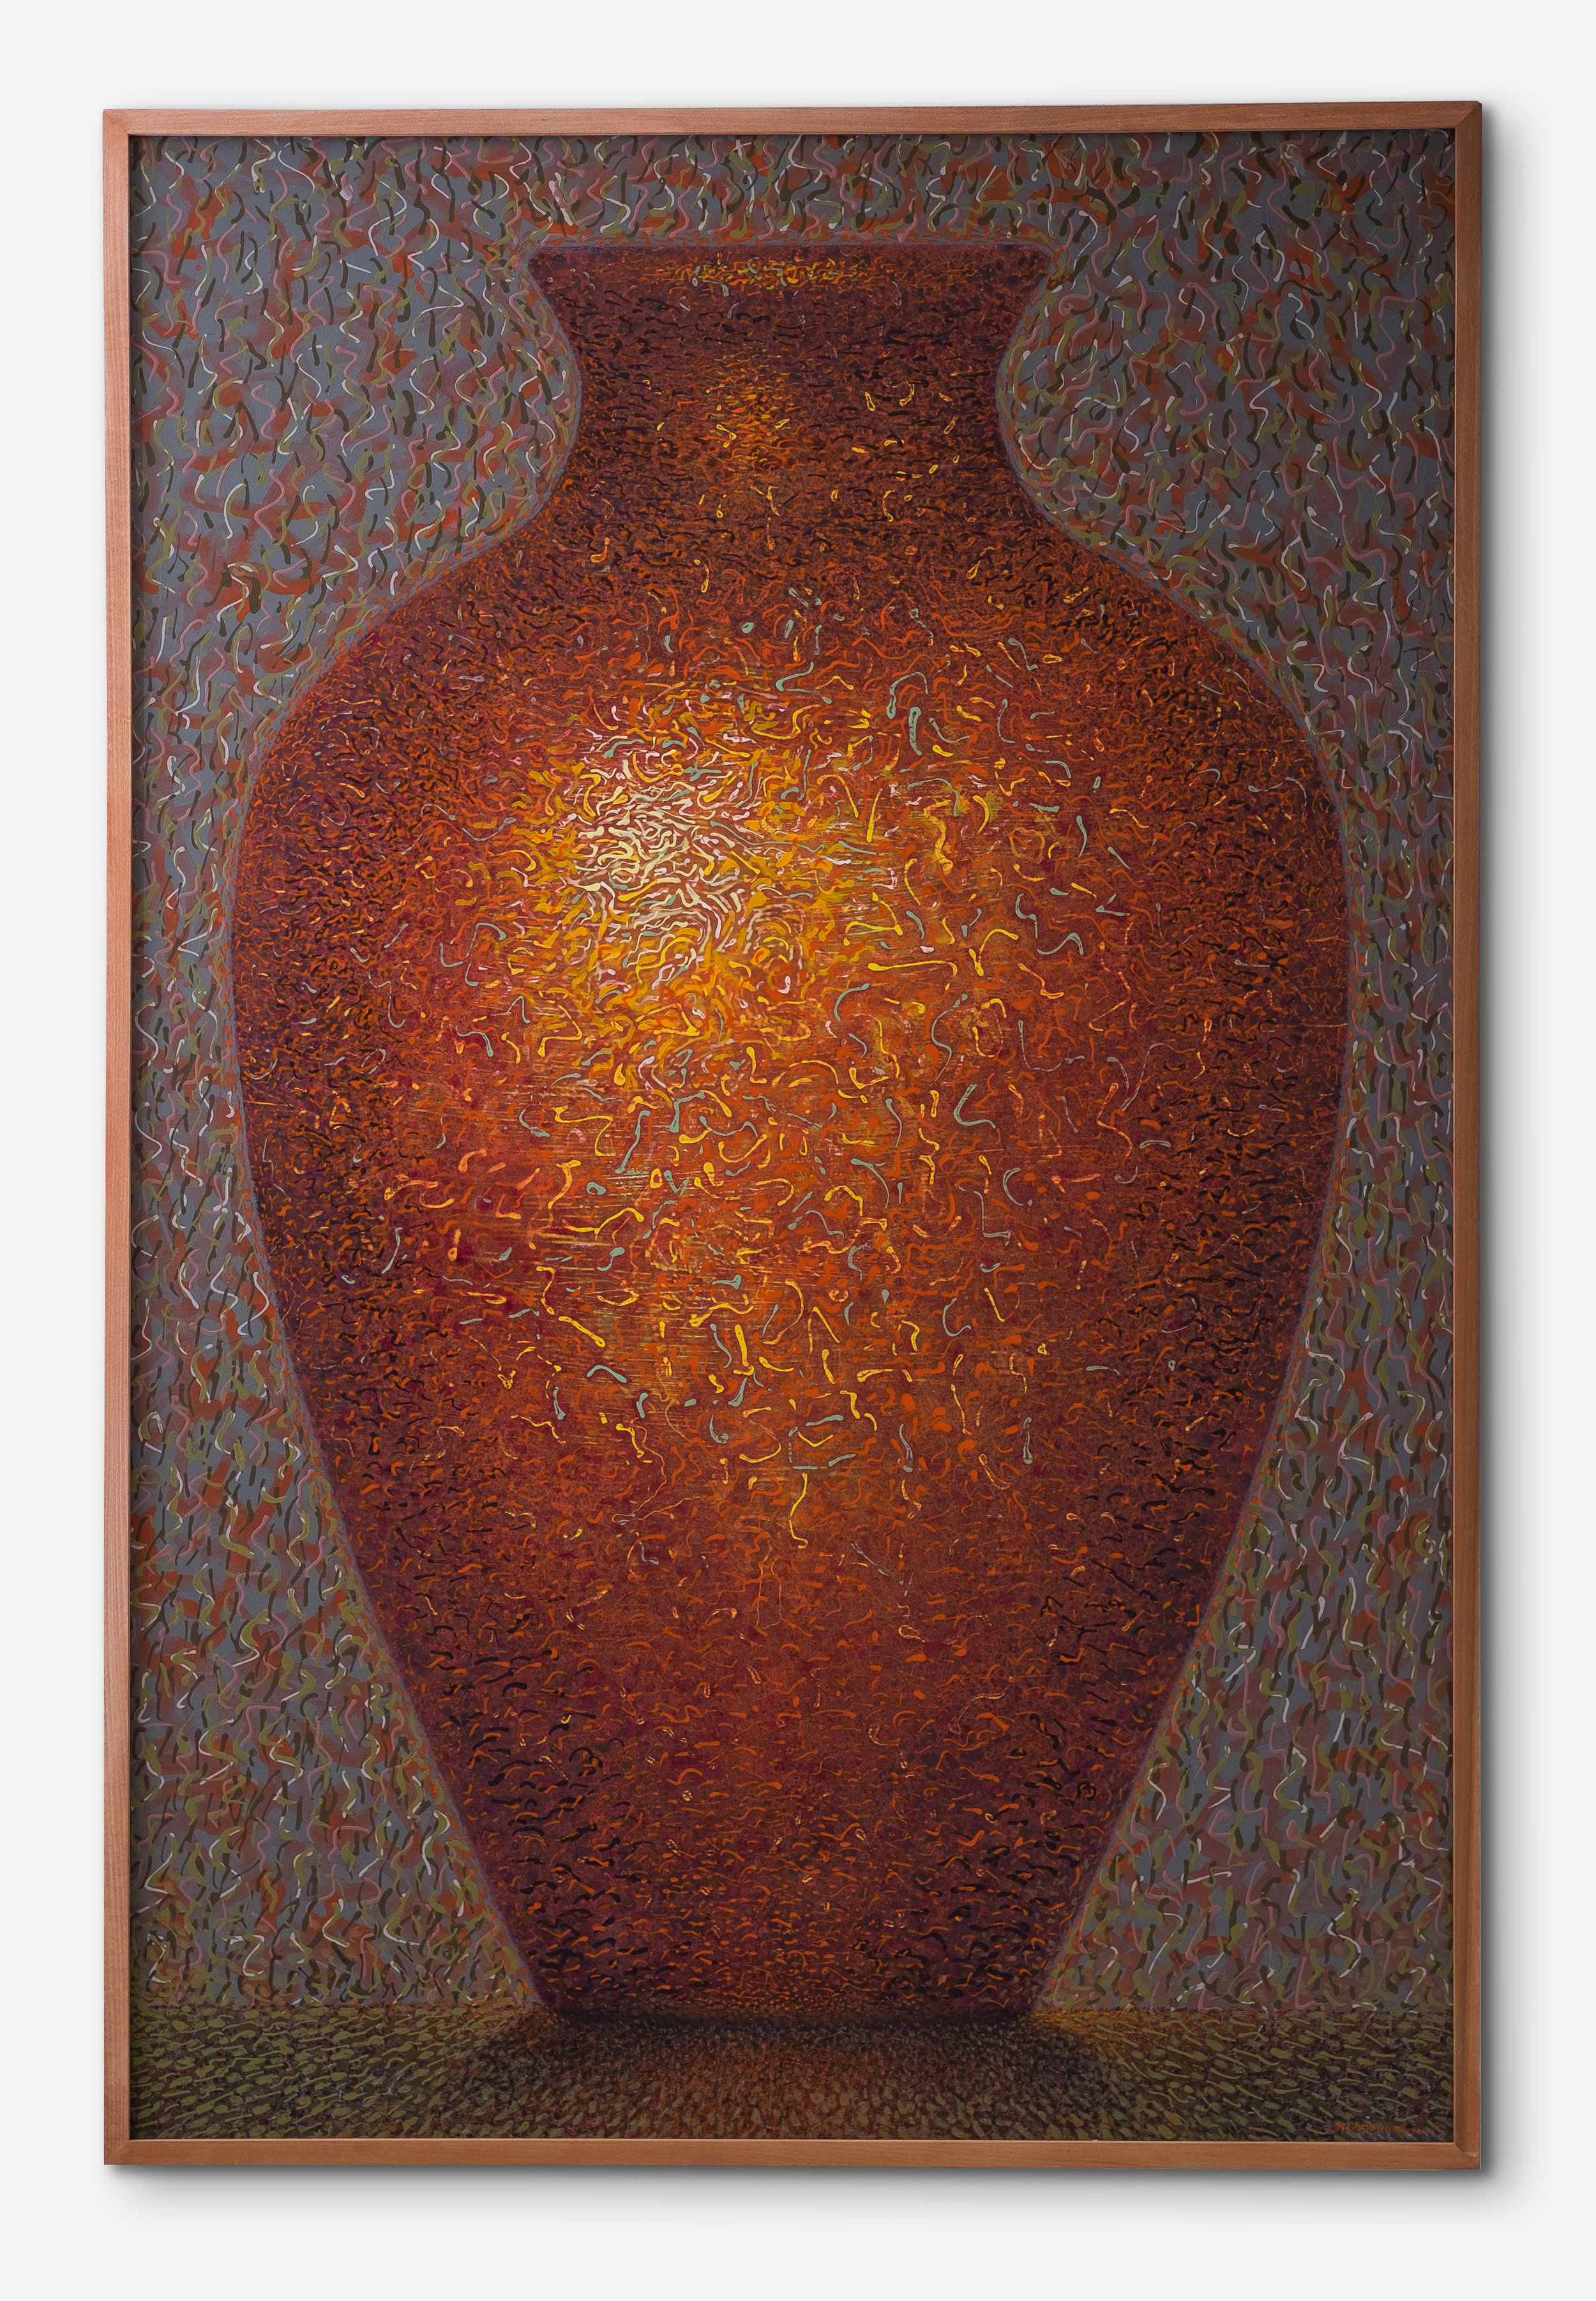 Earth Vase #20